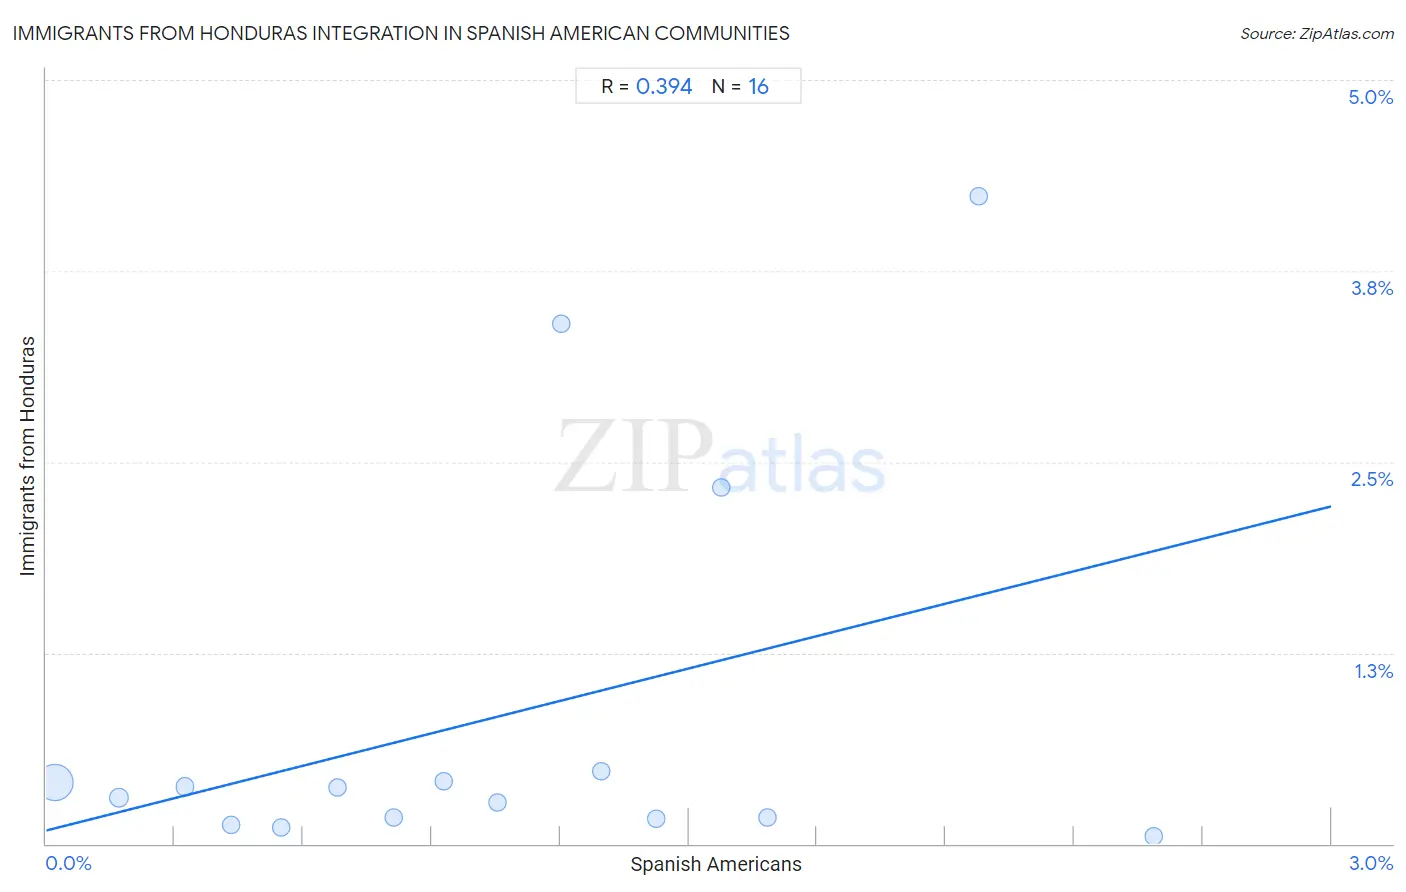 Spanish American Integration in Immigrants from Honduras Communities